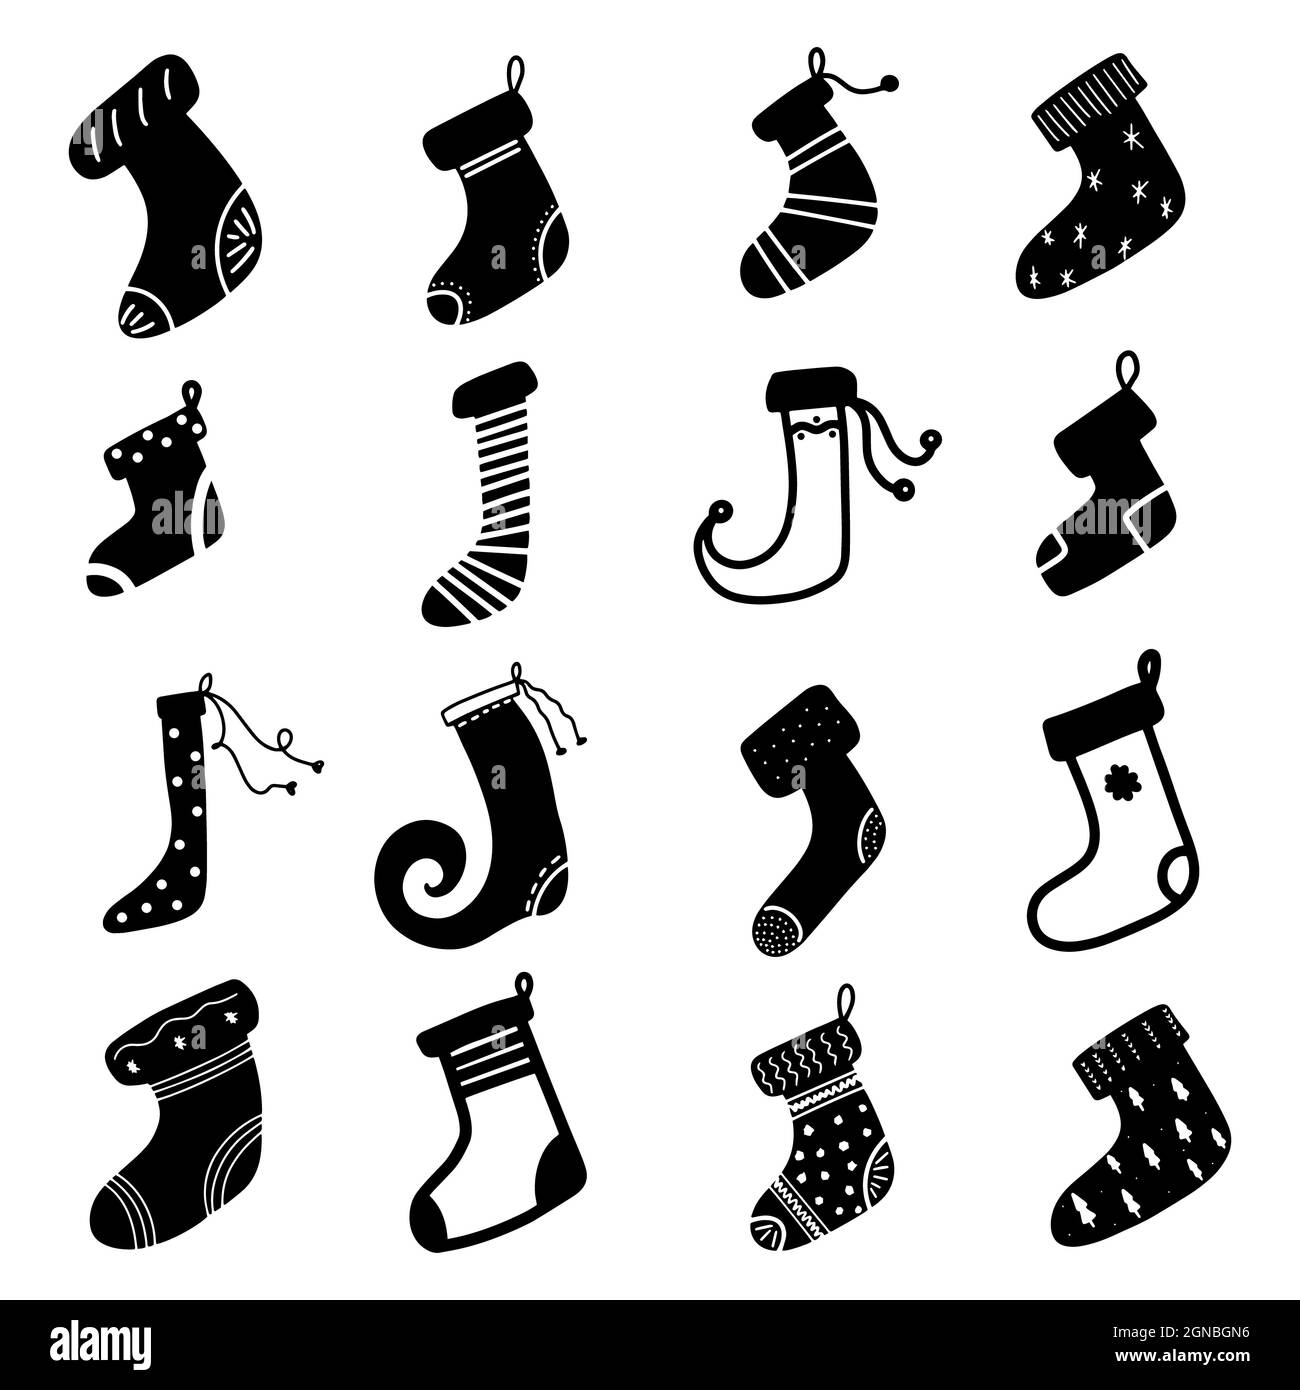 Santa Socks illustration graphic design element set. Black Xmas sock gift present footwear. Calligraphy winter feet clothes laces for children book Stock Photo